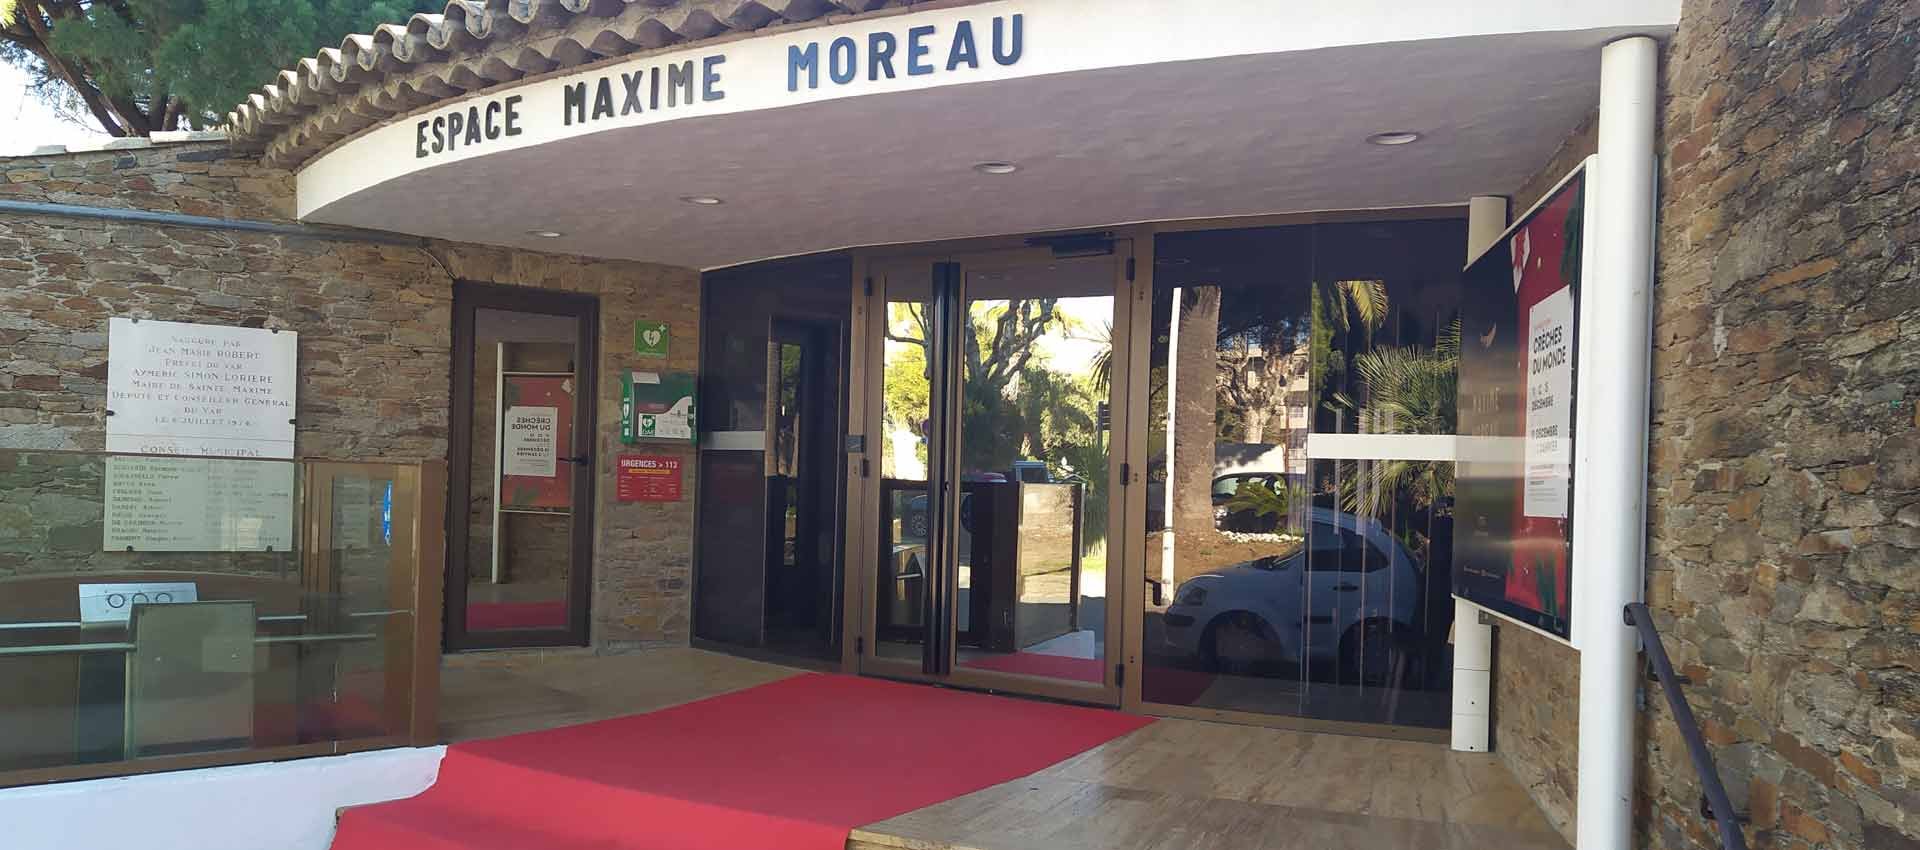 Espace Maxime Moreau